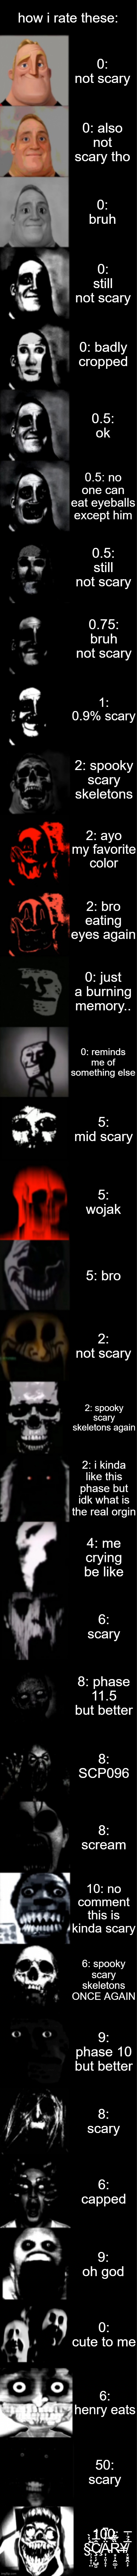 e | how i rate these:; 0: not scary; 0: also not scary tho; 0: bruh; 0: still not scary; 0: badly cropped; 0.5: ok; 0.5: no one can eat eyeballs except him; 0.5: still not scary; 0.75: bruh not scary; 1: 0.9% scary; 2: spooky scary skeletons; 2: ayo my favorite color; 2: bro eating eyes again; 0: just a burning memory.. 0: reminds me of something else; 5: mid scary; 5: wojak; 5: bro; 2: not scary; 2: spooky scary skeletons again; 2: i kinda like this phase but idk what is the real orgin; 4: me crying be like; 6: scary; 8: phase 11.5 but better; 8: SCP096; 8: scream; 10: no comment this is kinda scary; 6: spooky scary skeletons ONCE AGAIN; 9: phase 10 but better; 8: scary; 6: capped; 9: oh god; 0: cute to me; 6: henry eats; 50: scary; 100: §̴̹̹̟̩̤́̔̀͘̚Ç̸̧̩̗̺̻̂̅̓́̆Ä̴͎̣̥̝͎̀͗̒̚͠Ȑ̴͙̦̭͚̩̆̅͂̓¥̸̟͓̭̣̦̅̉̉̍̅ | image tagged in mr incredible becoming uncanny super extended hd,ok,memes | made w/ Imgflip meme maker